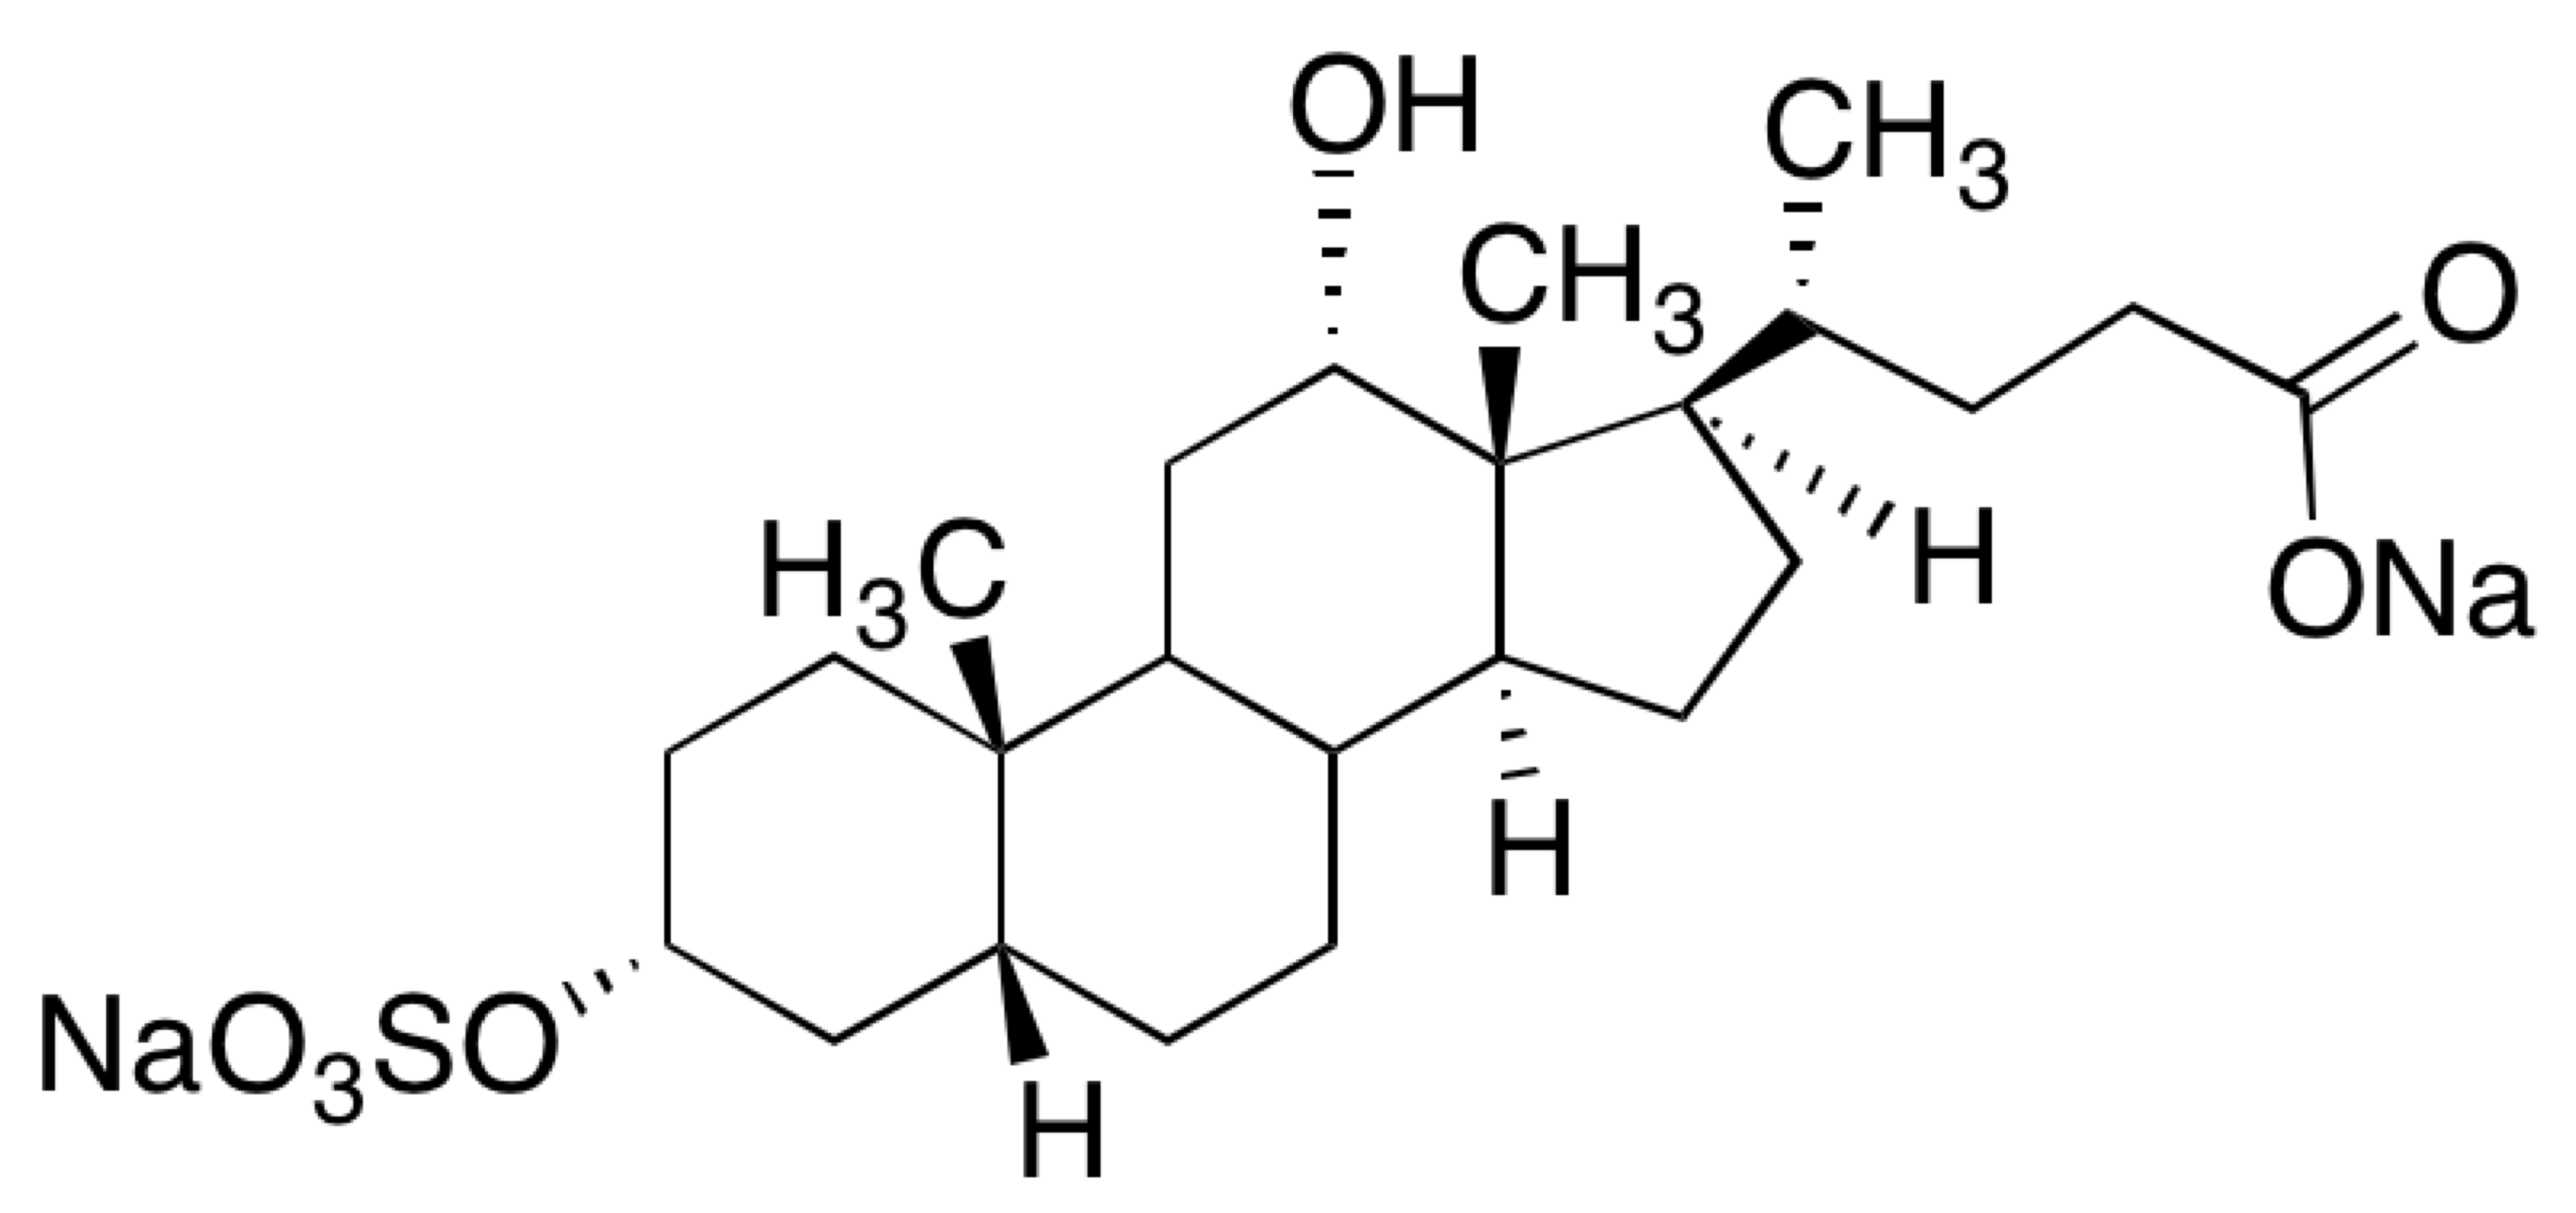 Deoxycholic Acid 3-O-Sulfate Disodium Salt